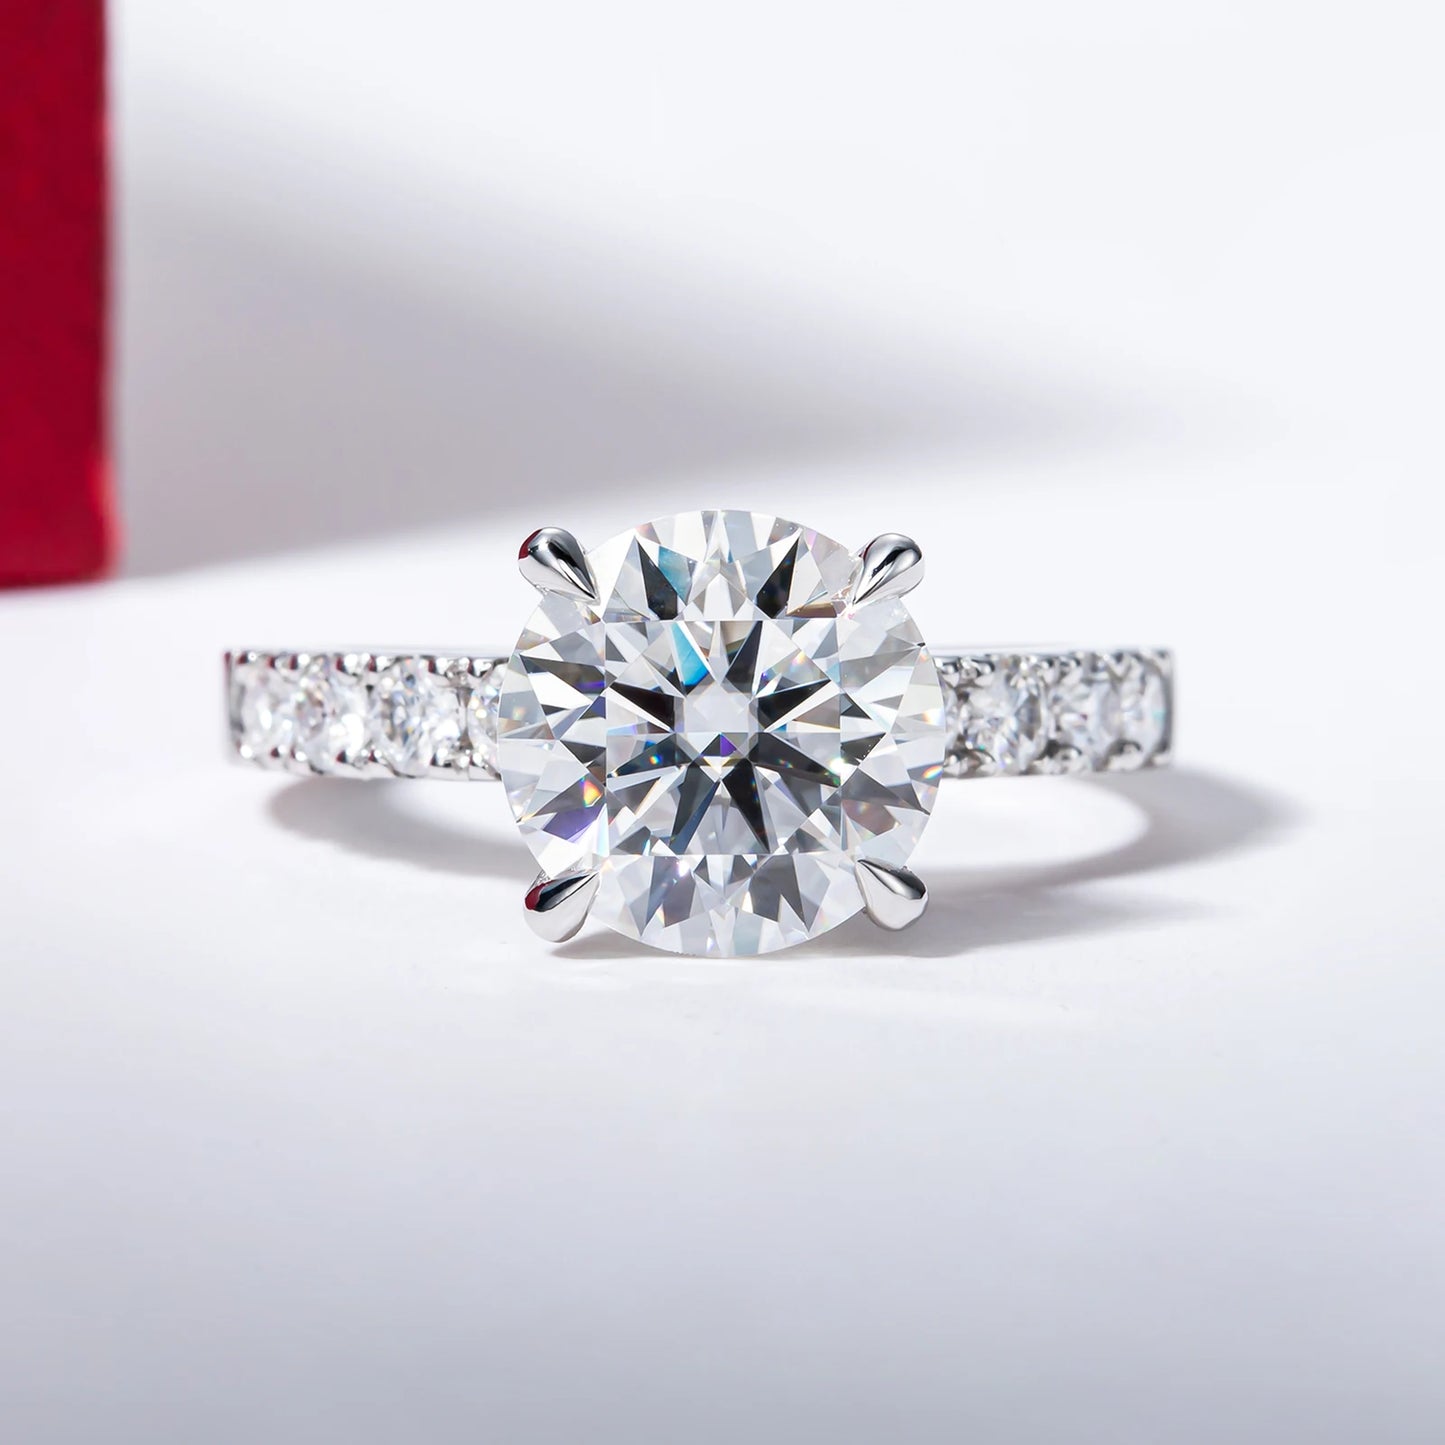 Moissanite Engagement Ring - Dazzling Alternative to Diamond Rings